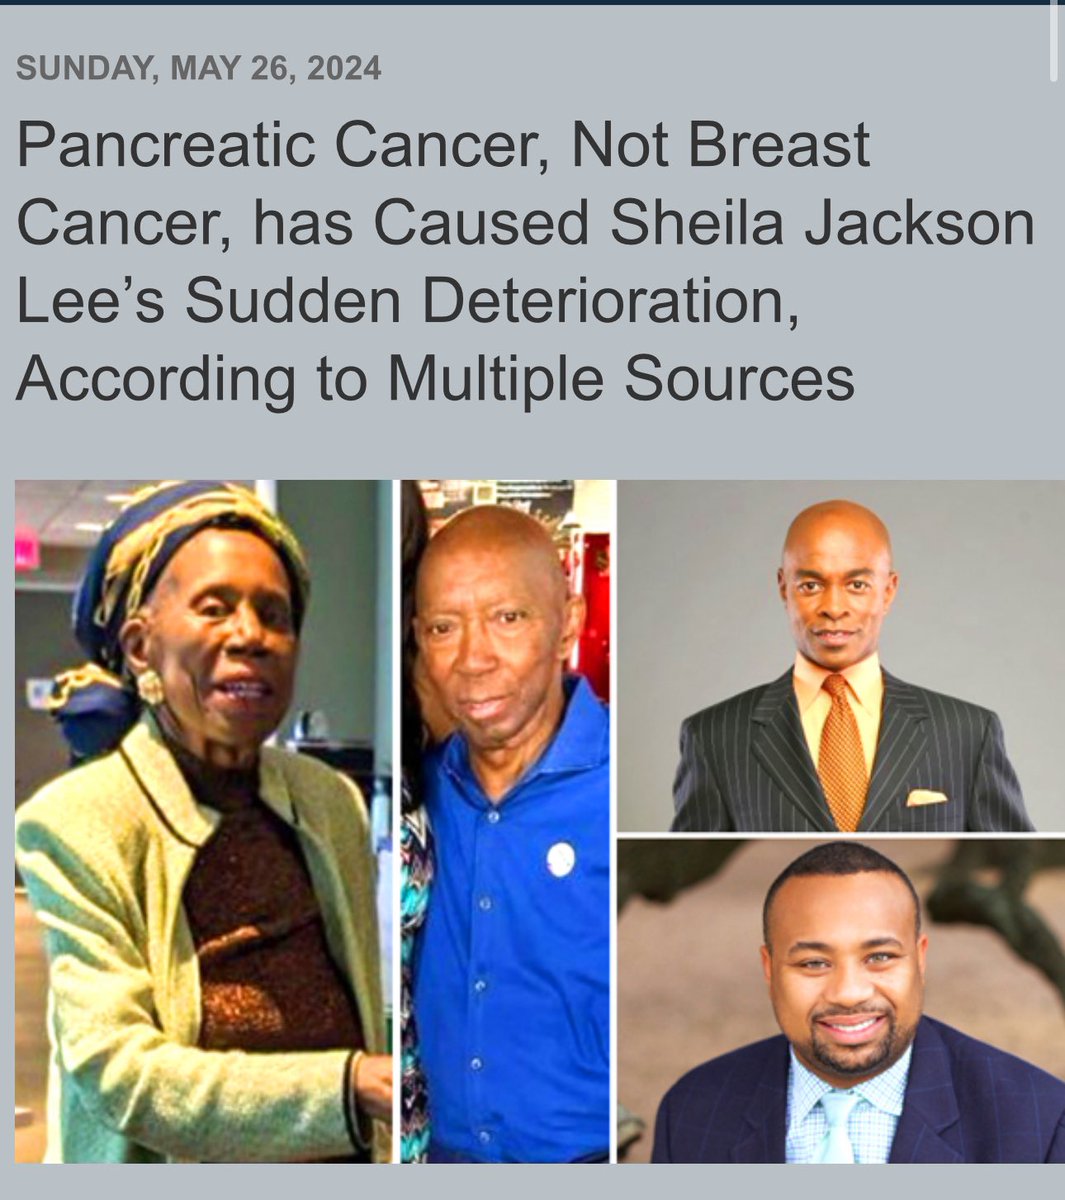 Sad news has broken that Sheila Jackson Lee allegedly has Pancreatic Cancer, not breast cancer  

Link: aubreyrtaylor.blogspot.com/2024/05/pancre…